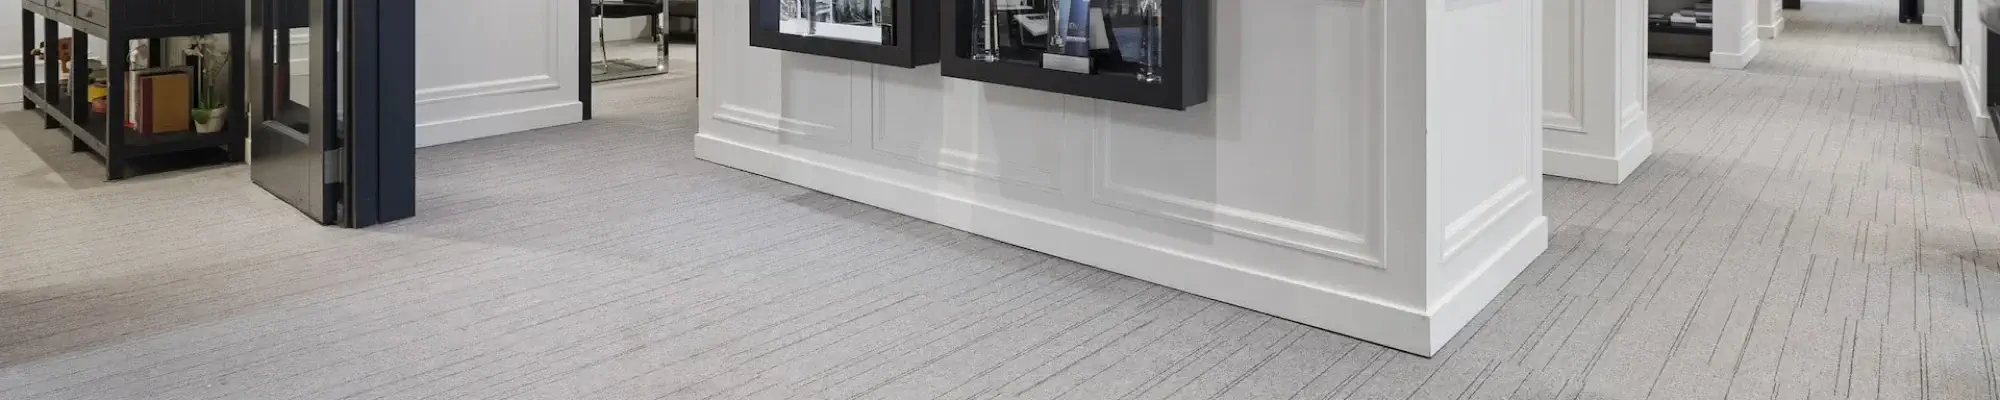 Carpet information on the latest trends from Vonderheide Floor Coverings in Pekin, IL